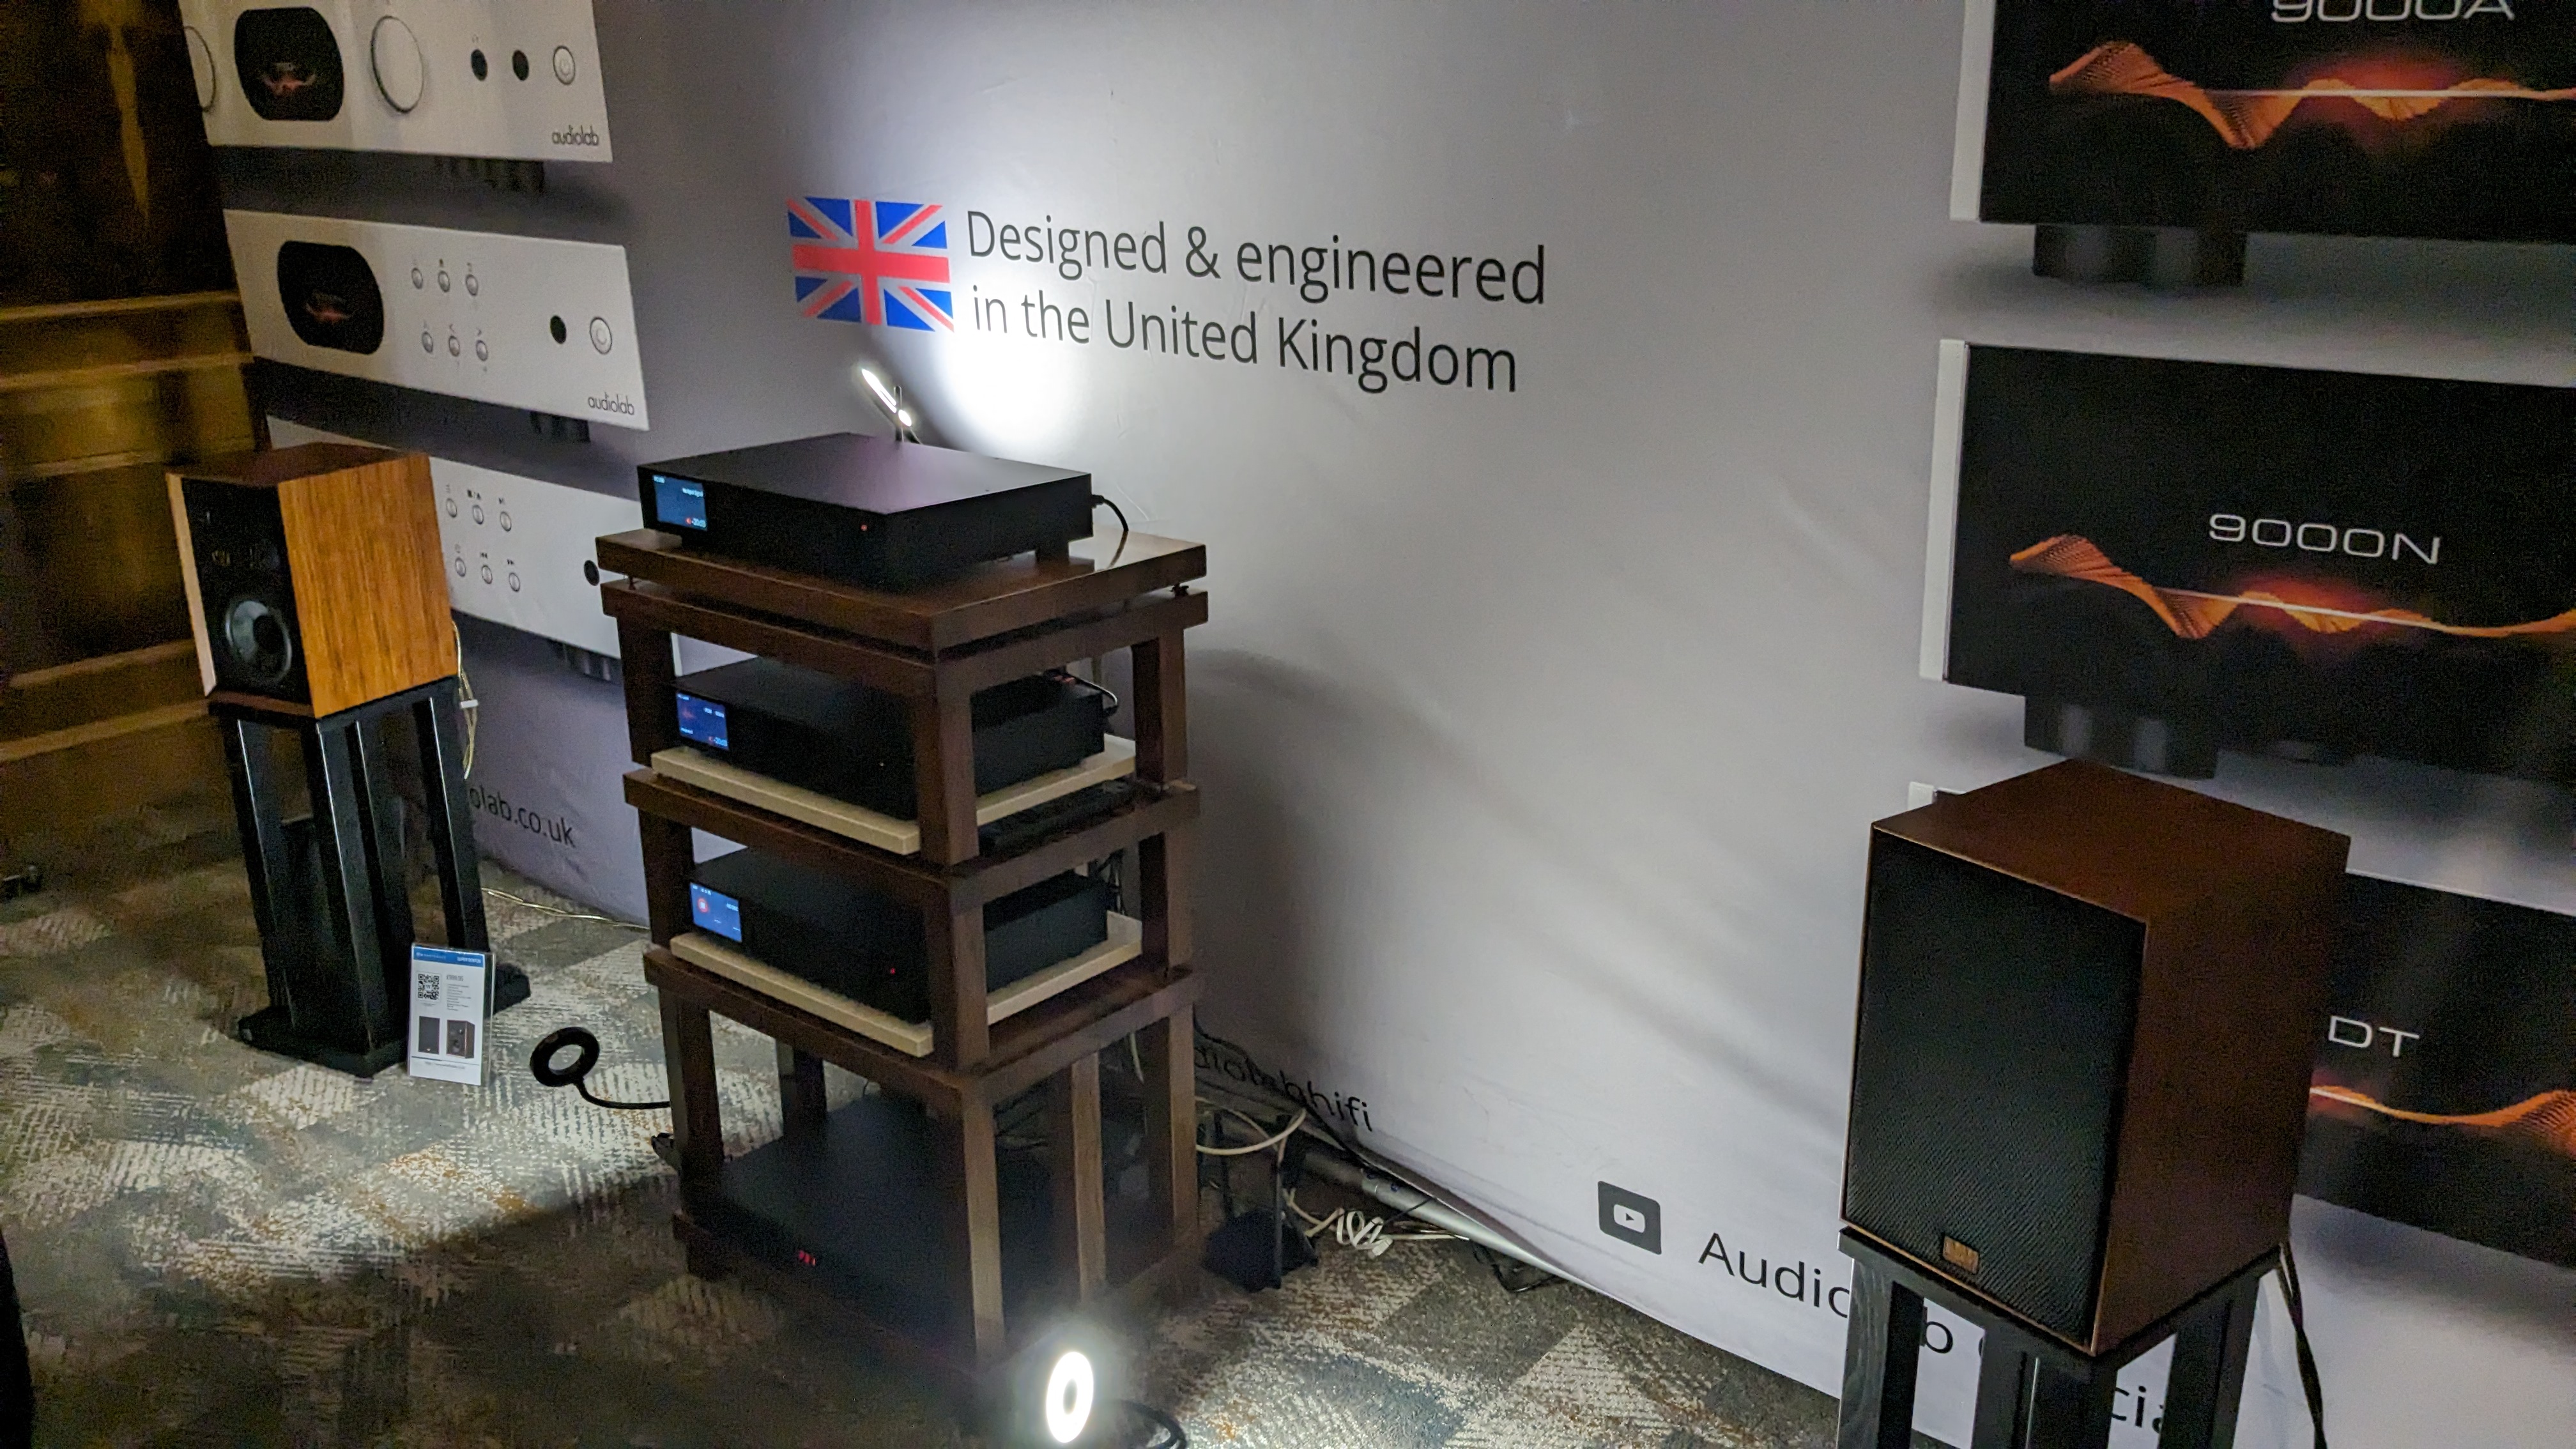 wharfedale super denton and audiolab 9000 series at Bristol hi-fi show